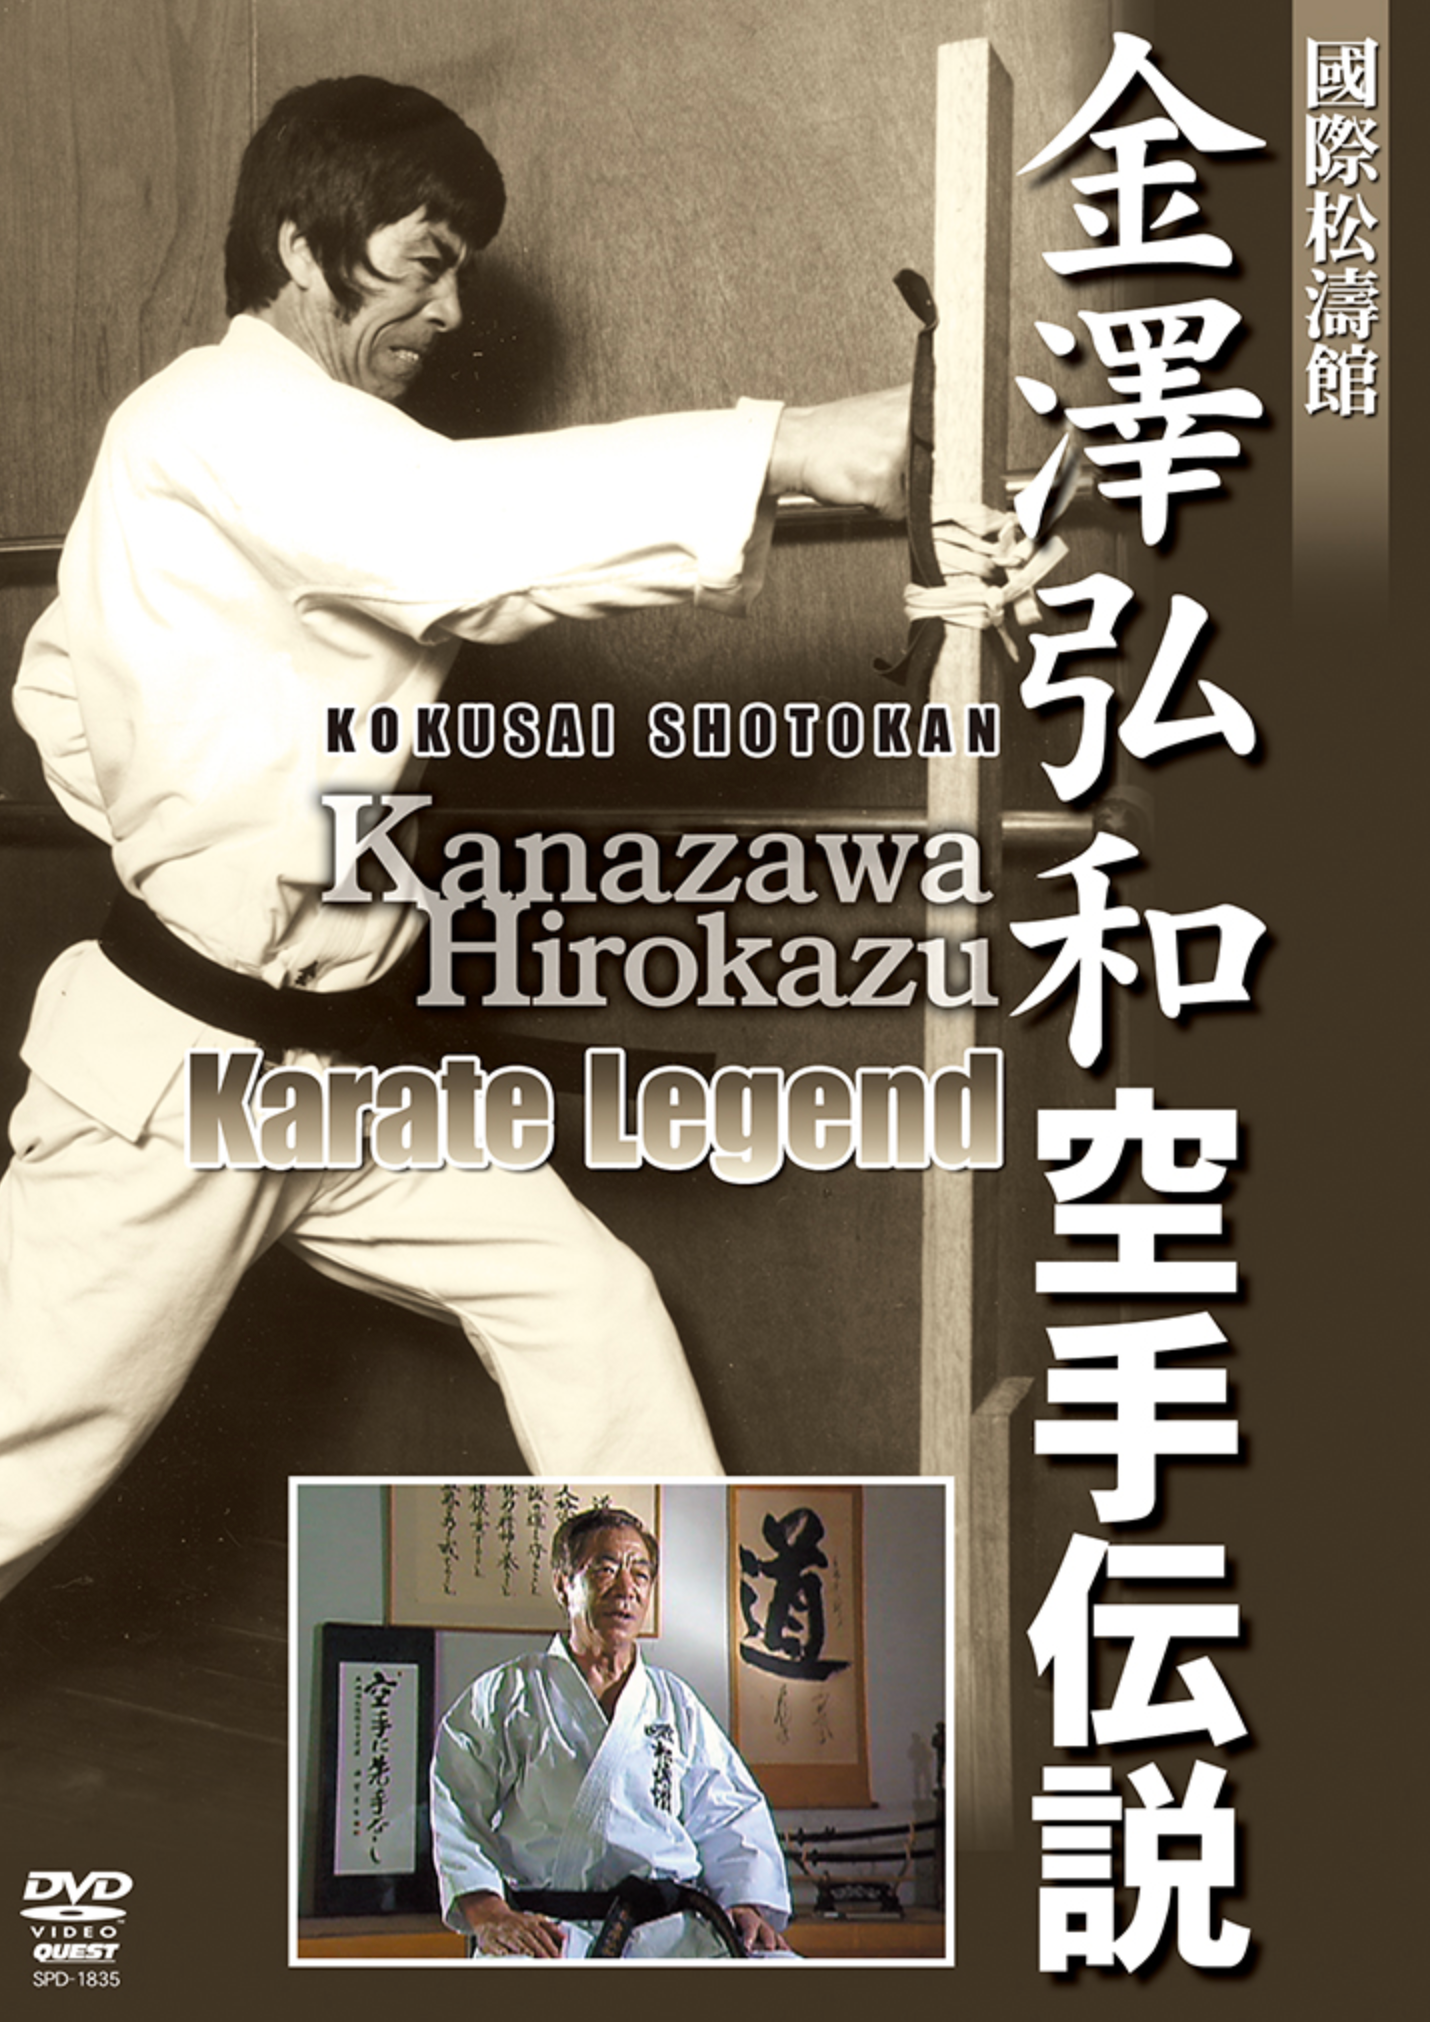 Karate Legend DVD by Hirokazu Kanazawa - Budovideos Inc